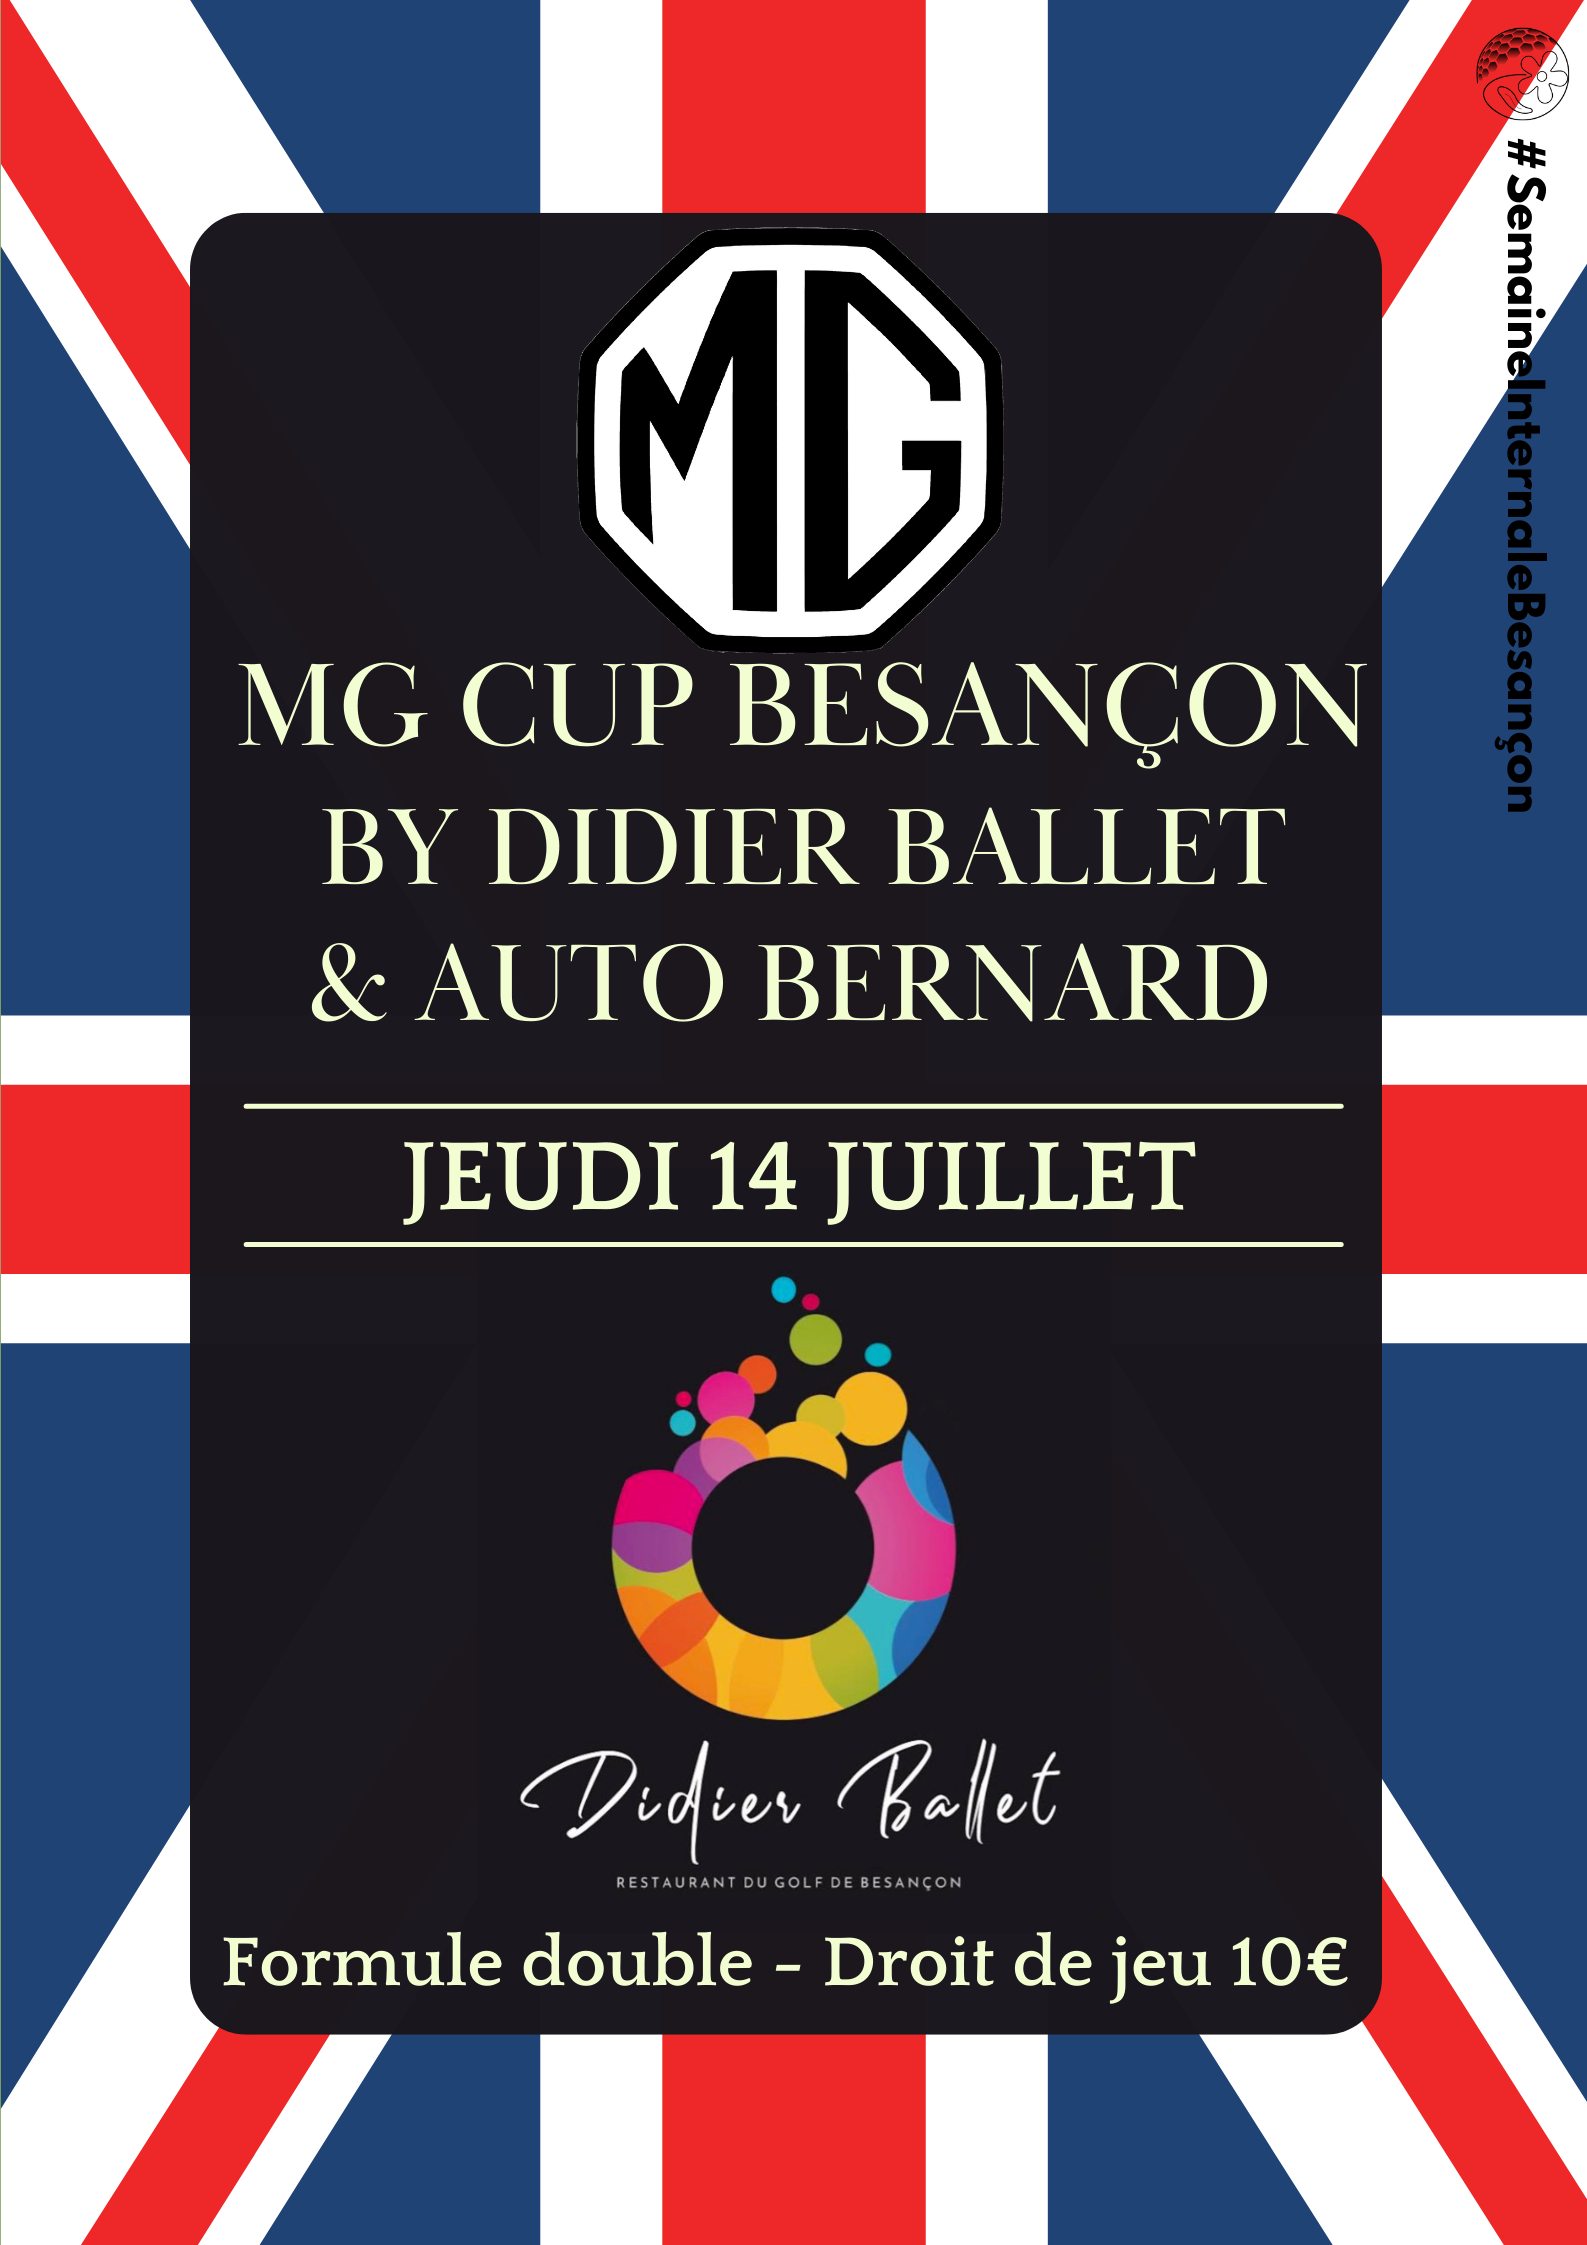 MG CUP by didier ballet auto bernard